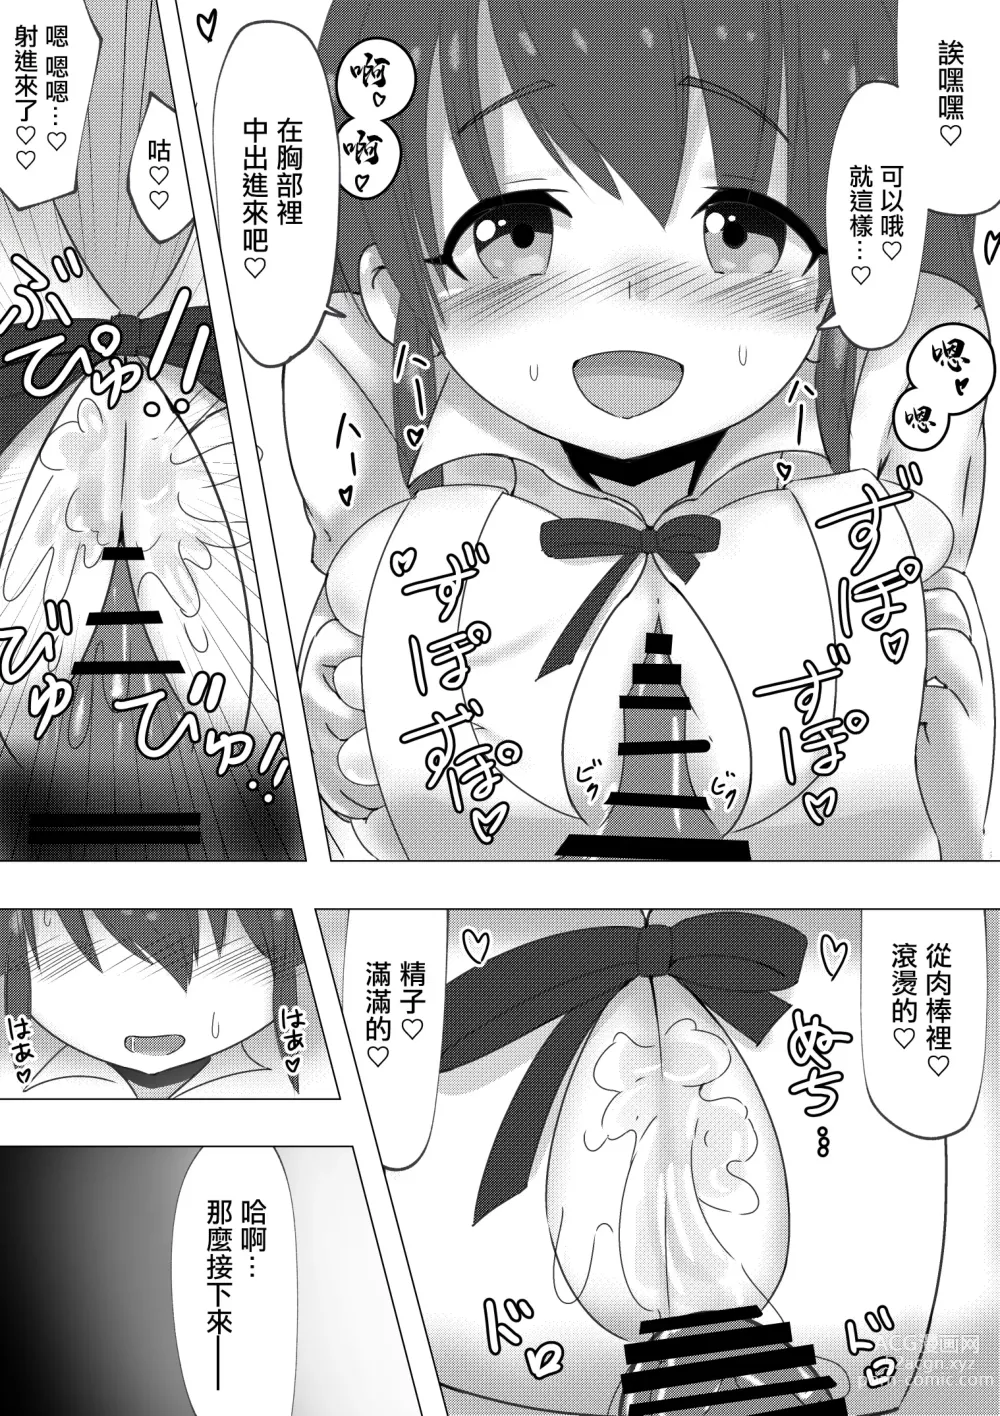 Page 8 of doujinshi 白楊醬給我做角色扮演性愛的故事